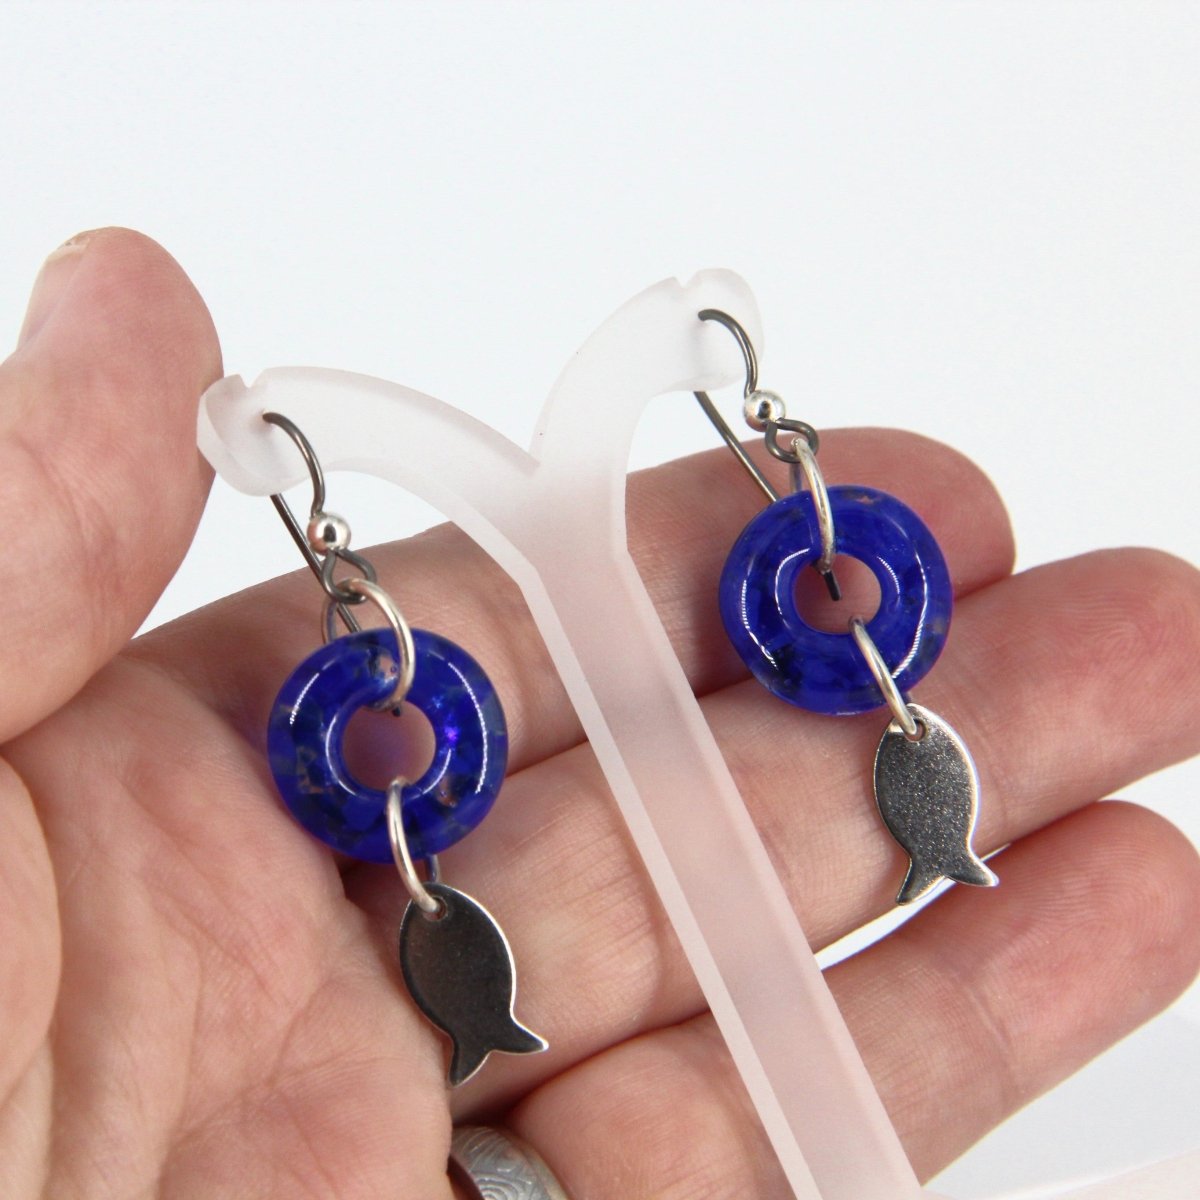 Dangle Earrings with Aqua Blue Glass Donut and Fish Charm